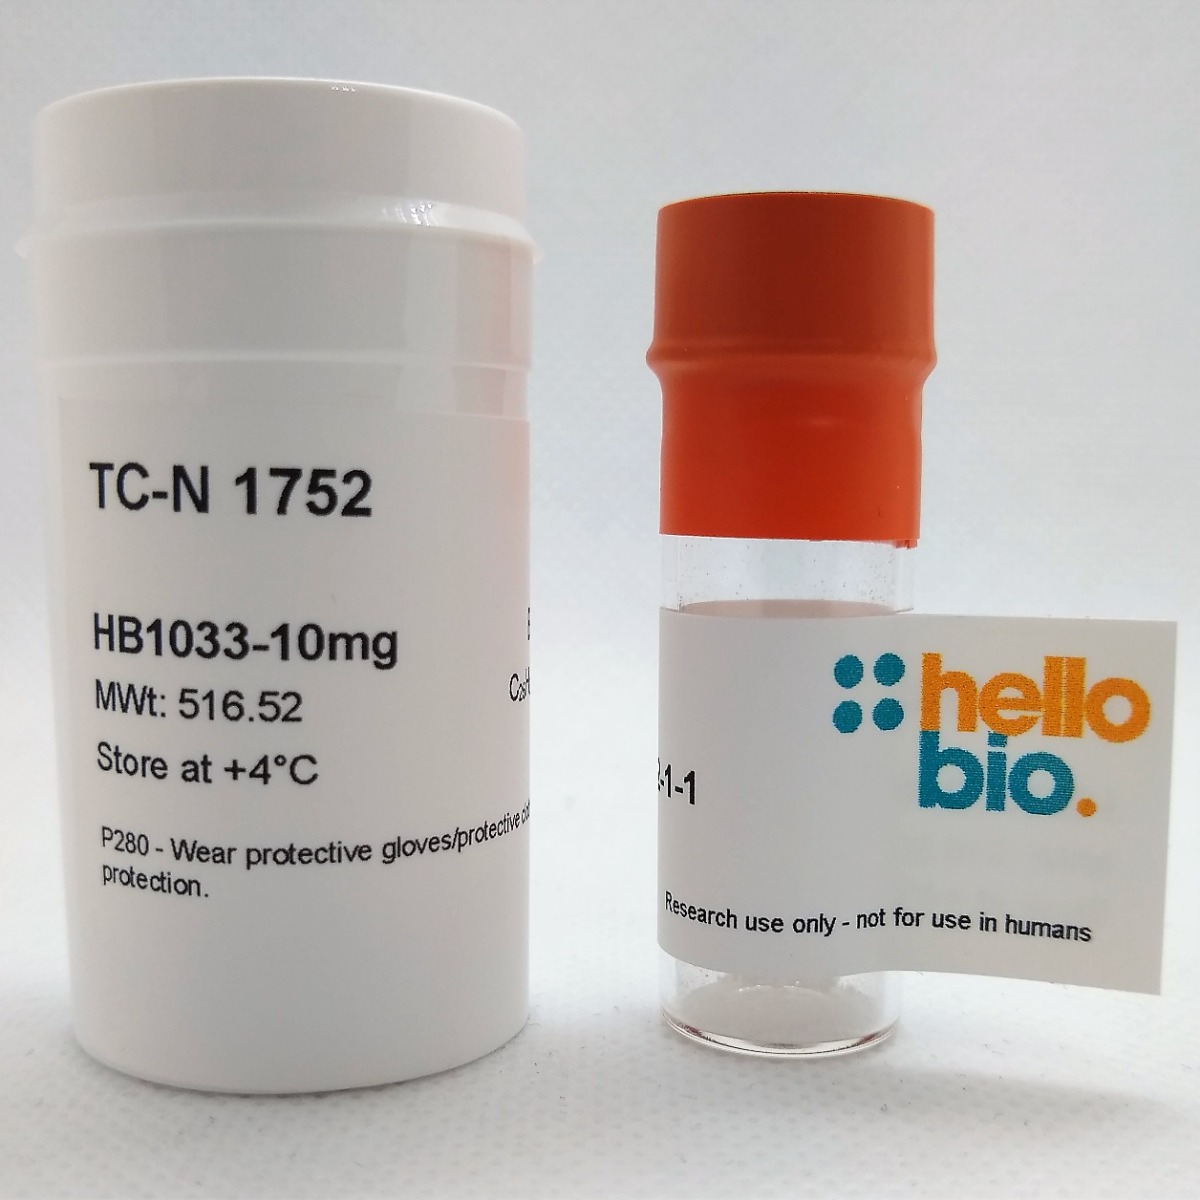 TC-N 1752 product vial image | Hello Bio